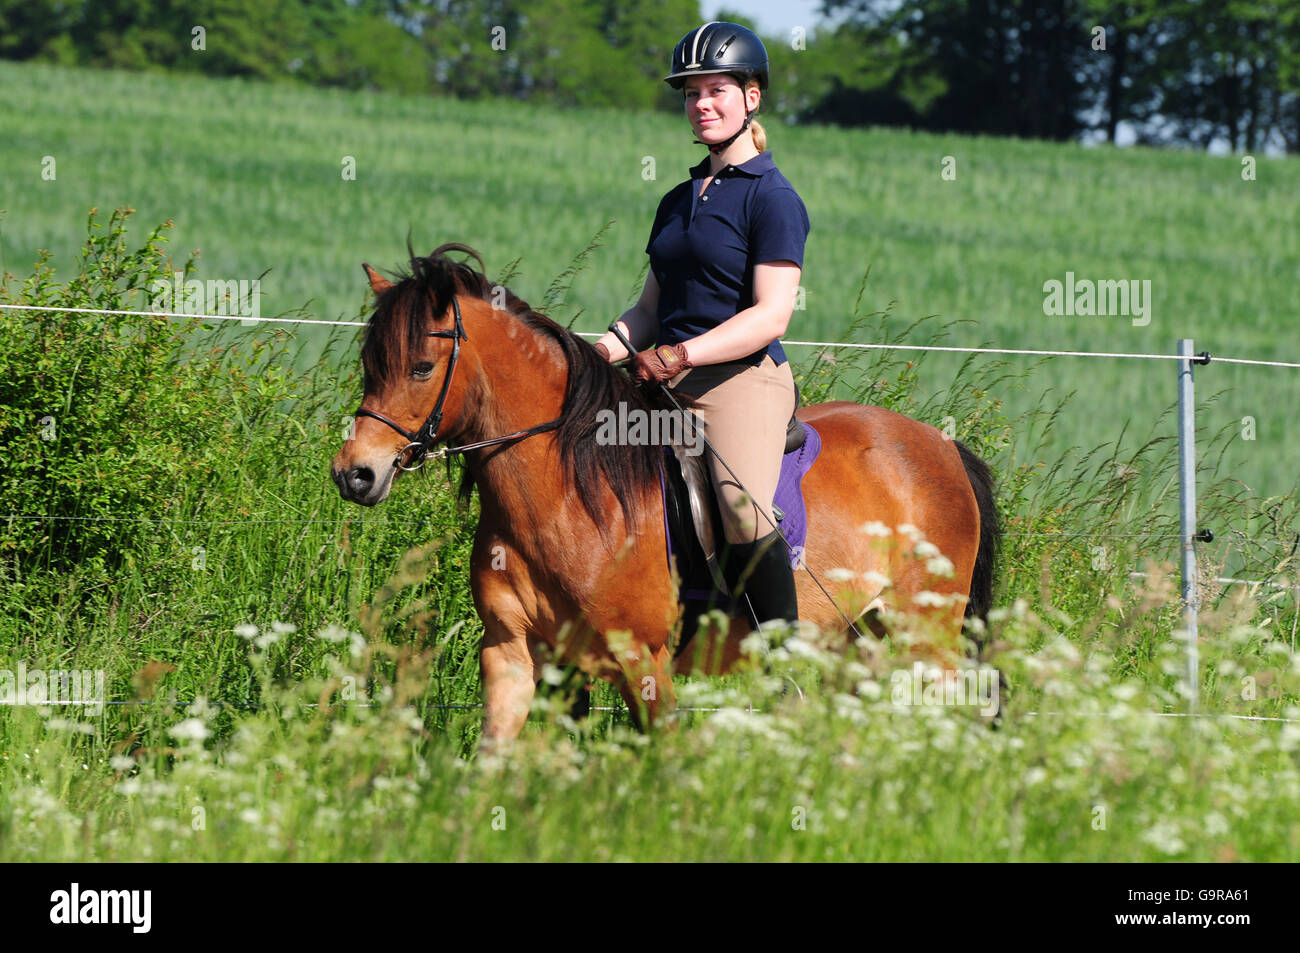 Woman riding Pony / crash helmet, riding gear, tack Stock Photo